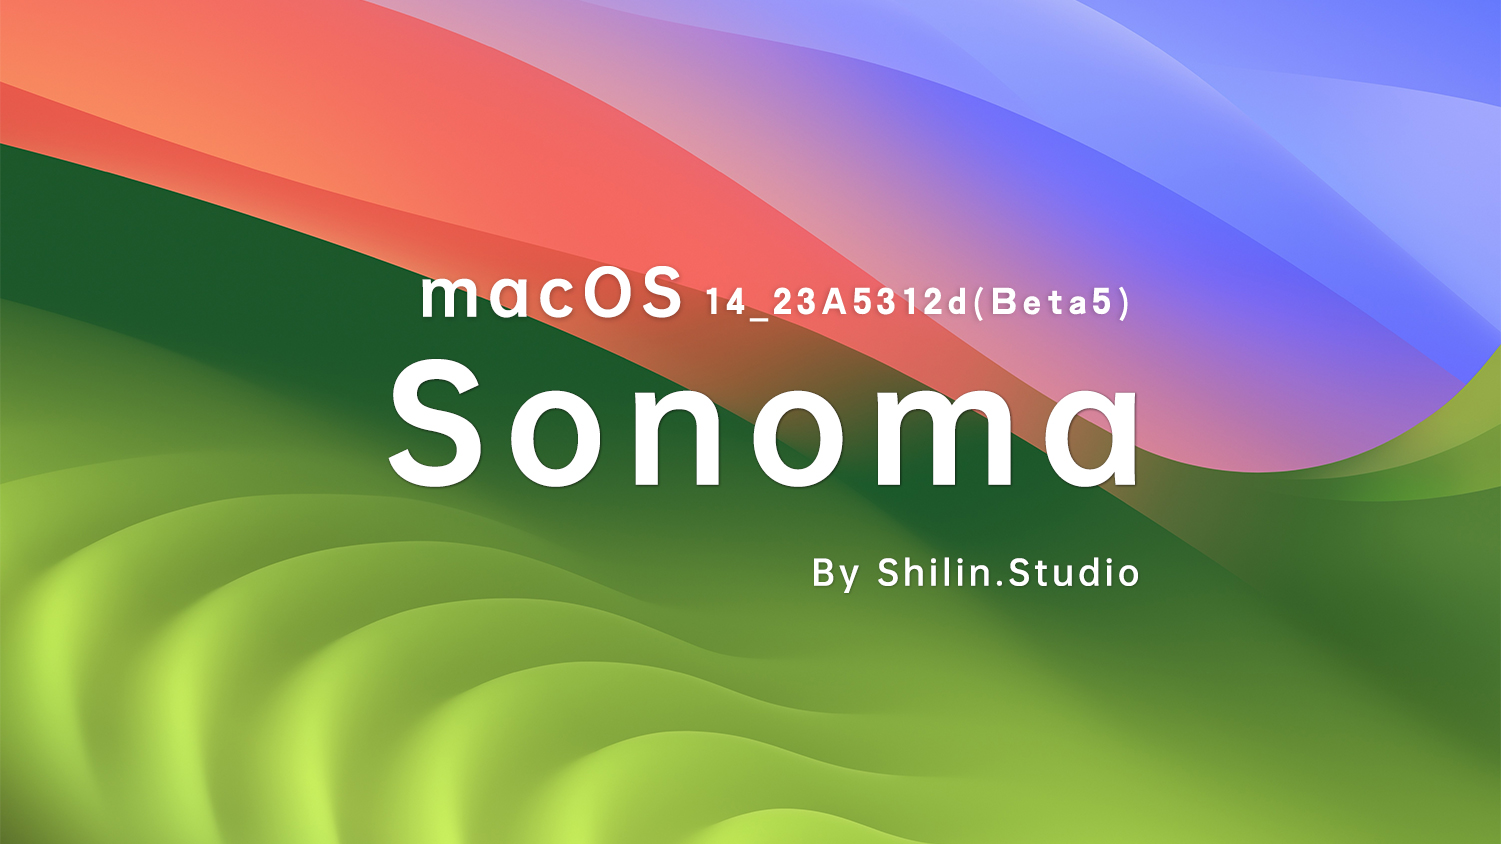 [macOS]macOS Sonoma 14 Beta5 (23A5312d) macOS可引导可虚拟机安装的纯净版ISO系统镜像安装包（已修复引导并优化）